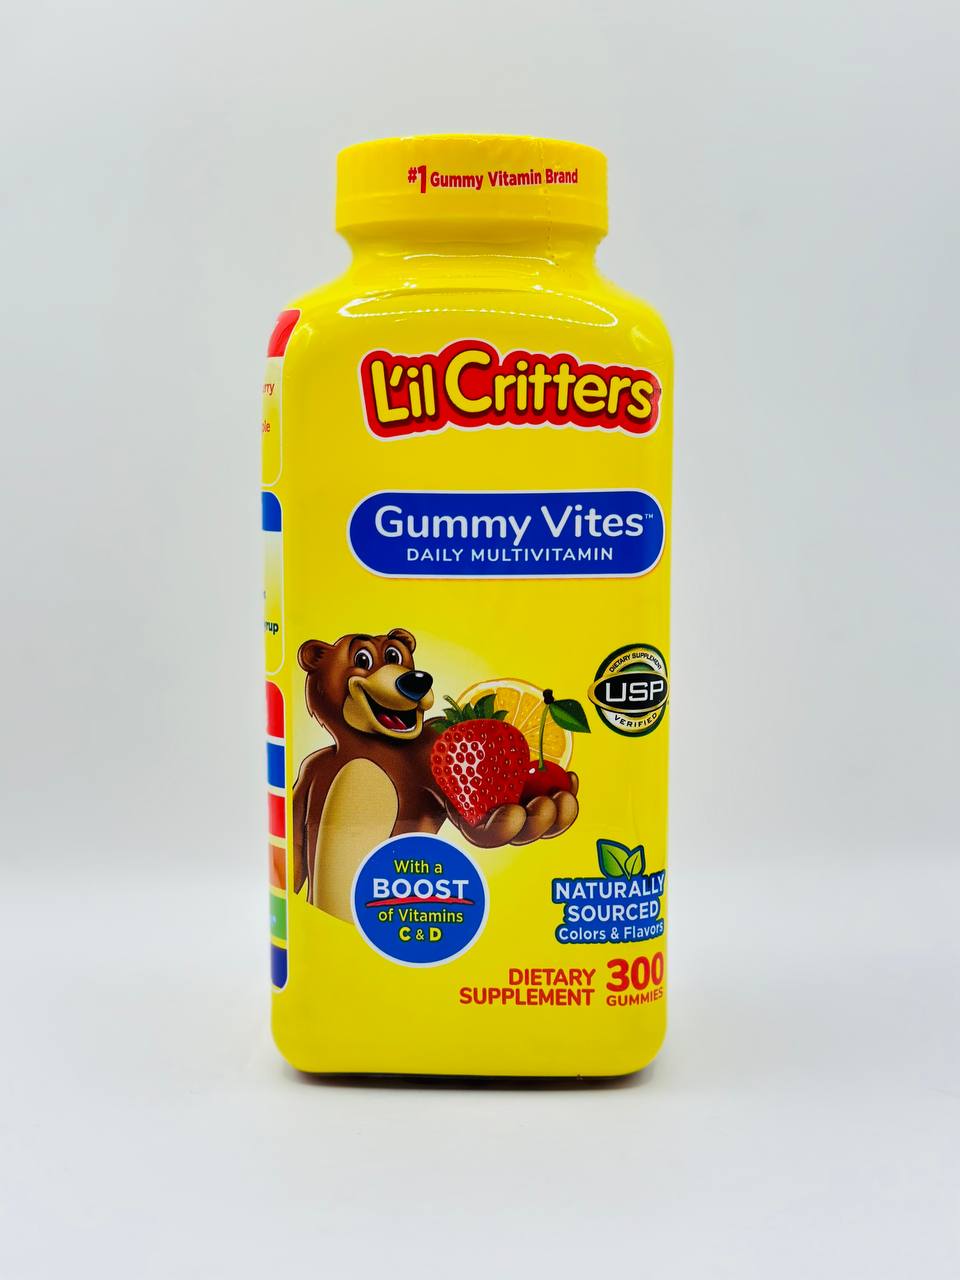 Lil critters gummy vites